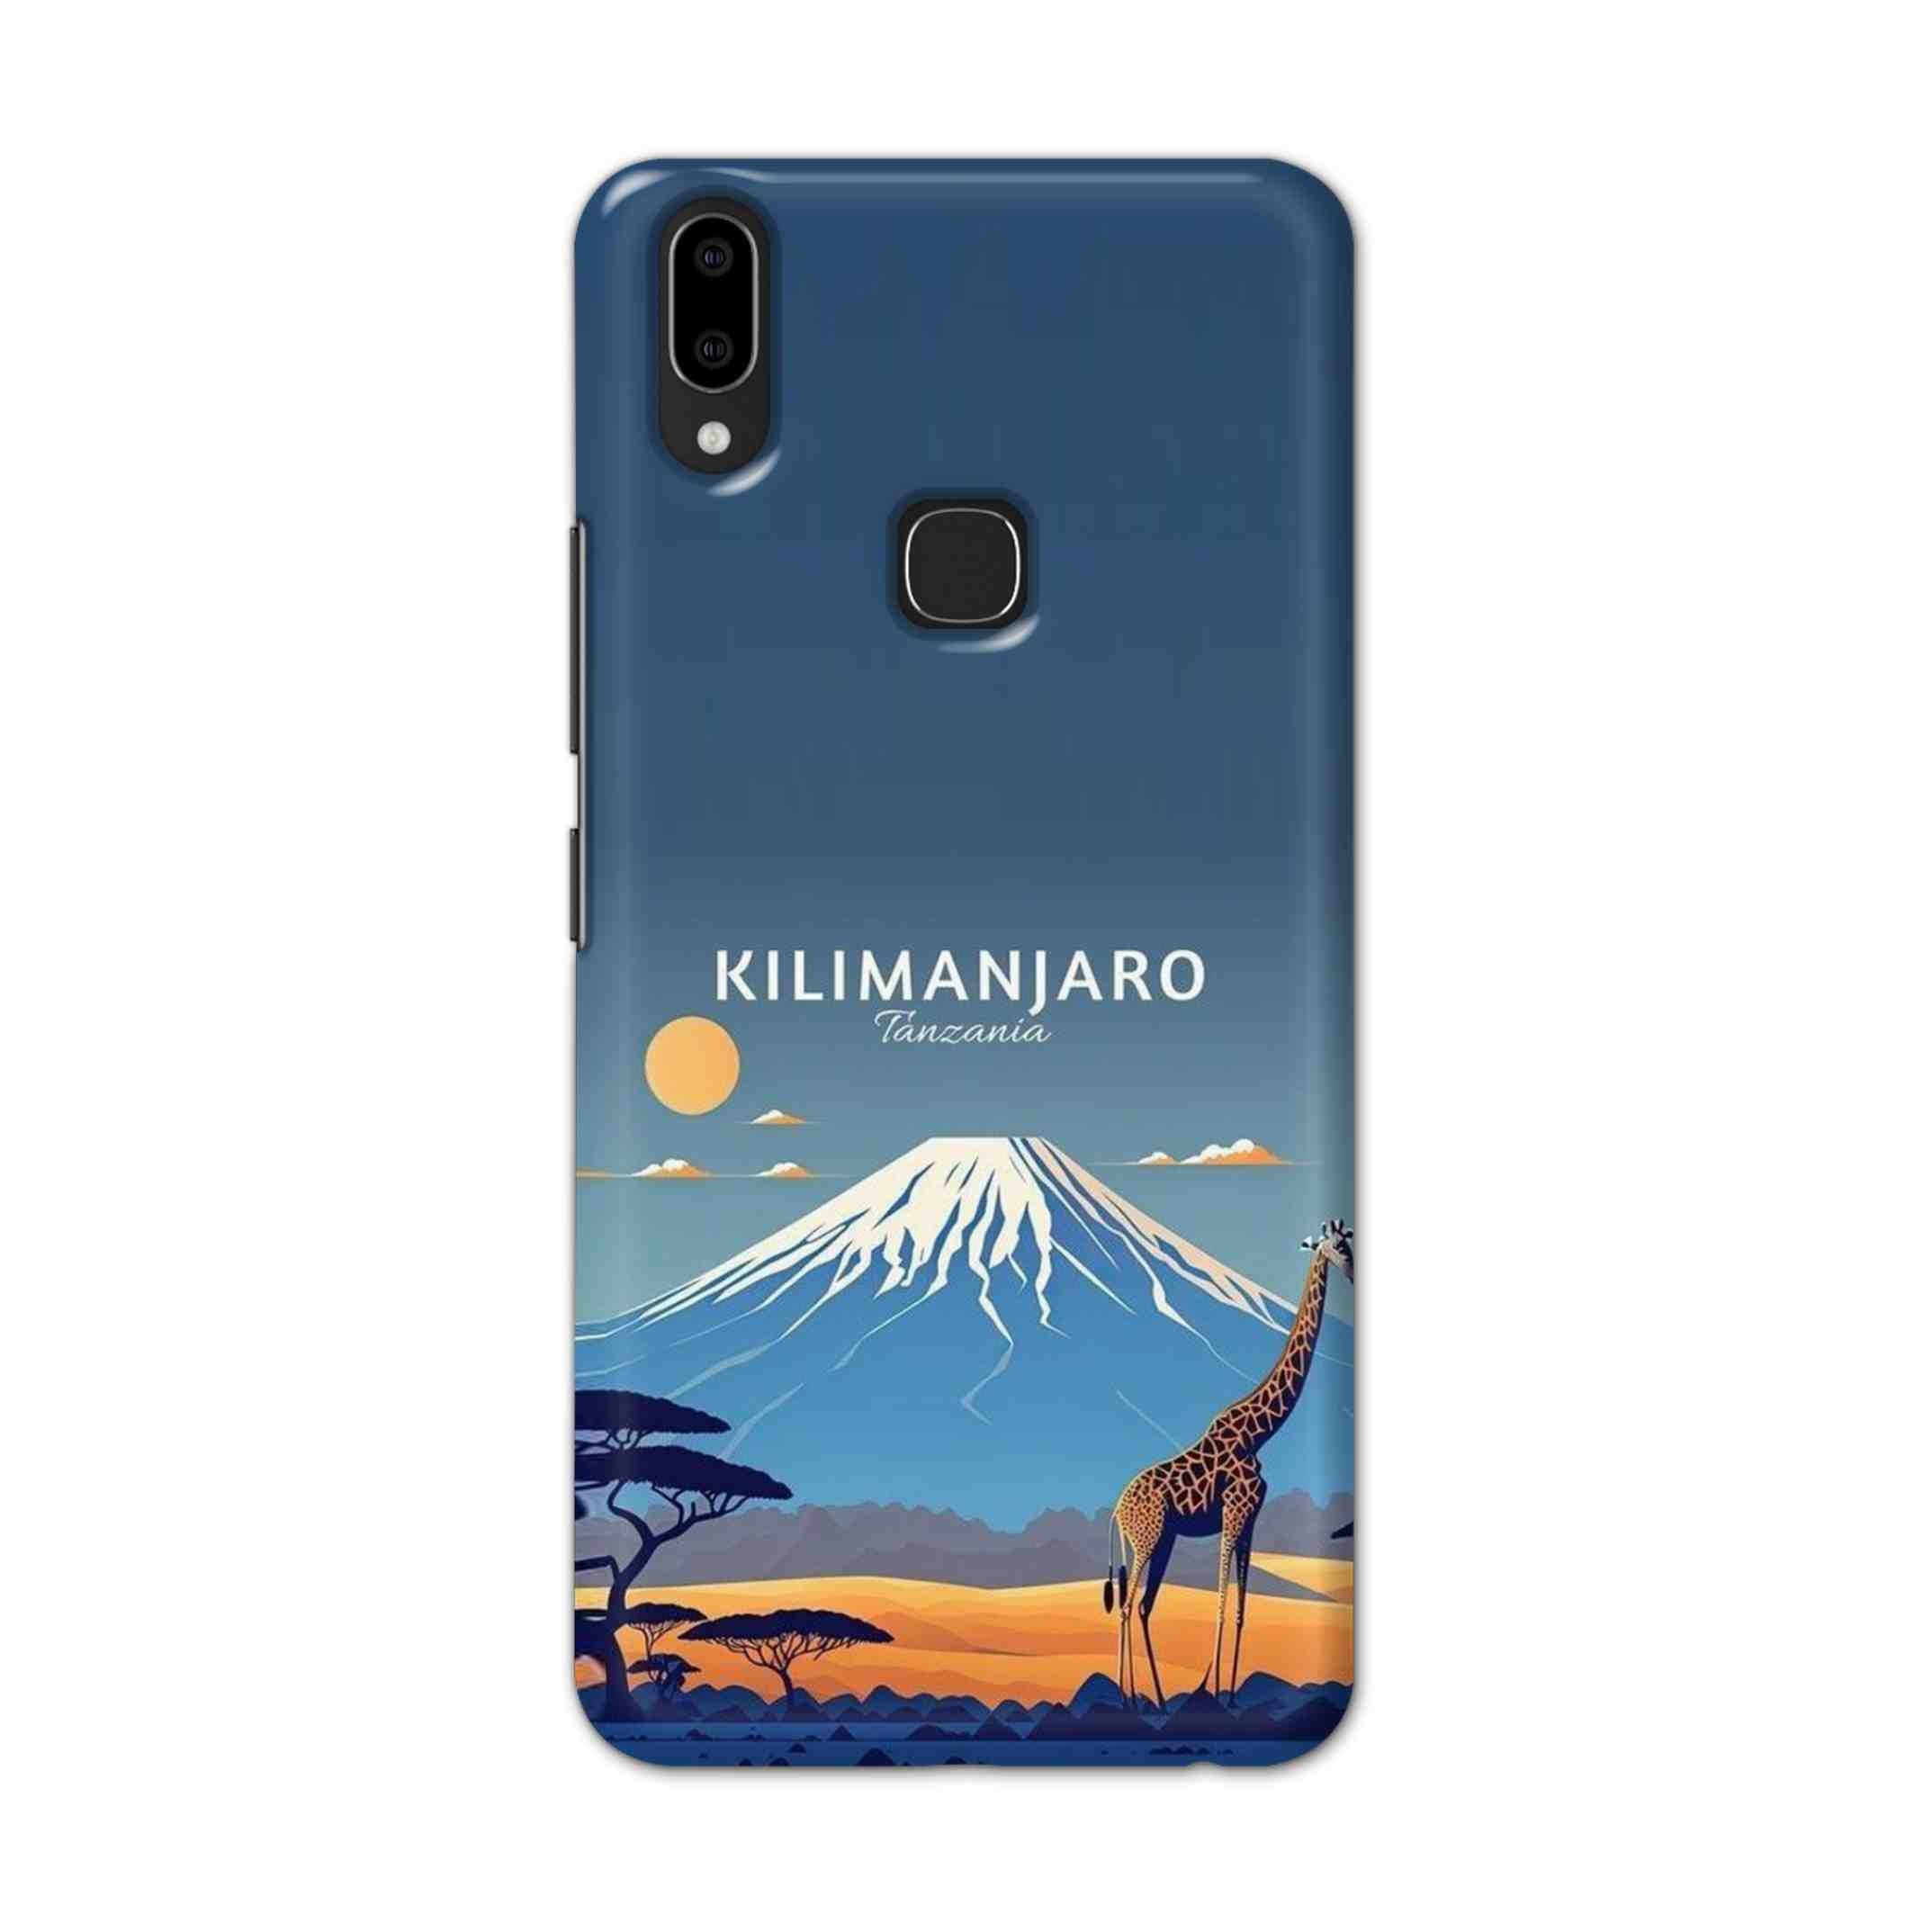 Buy Kilimanjaro Hard Back Mobile Phone Case Cover For Vivo V9 / V9 Youth Online